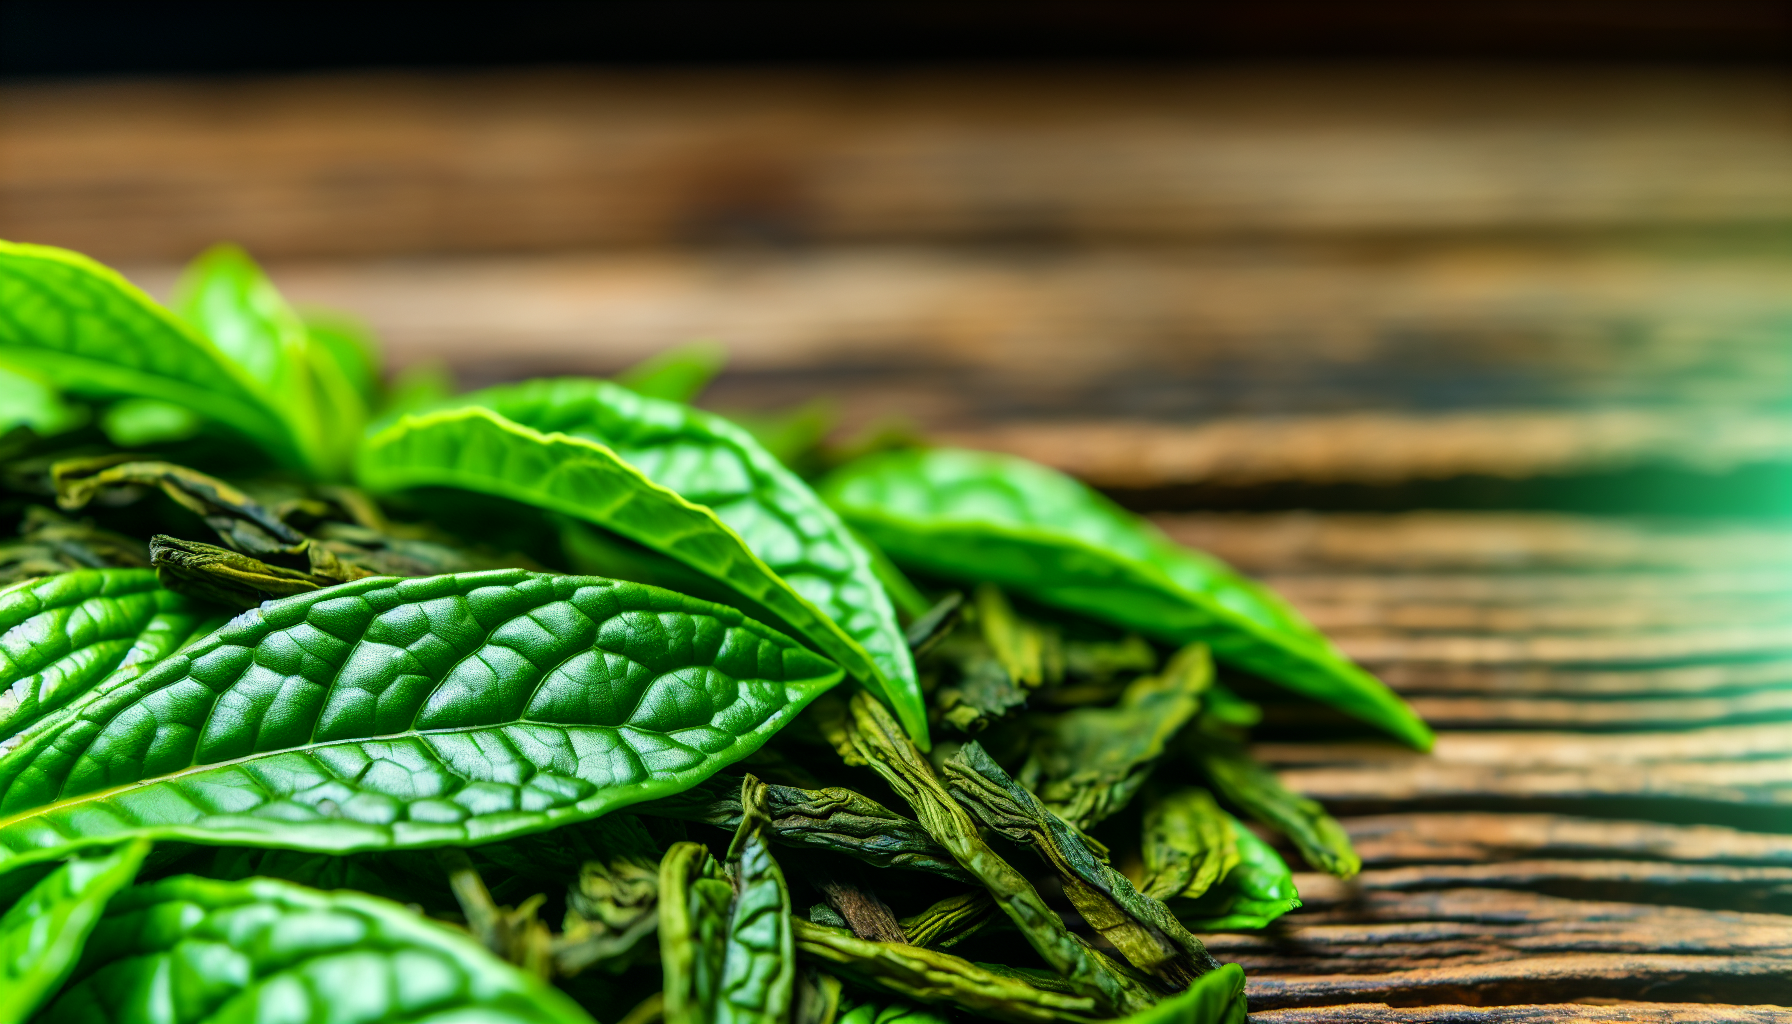 Antioxidant-rich herbal tea leaves